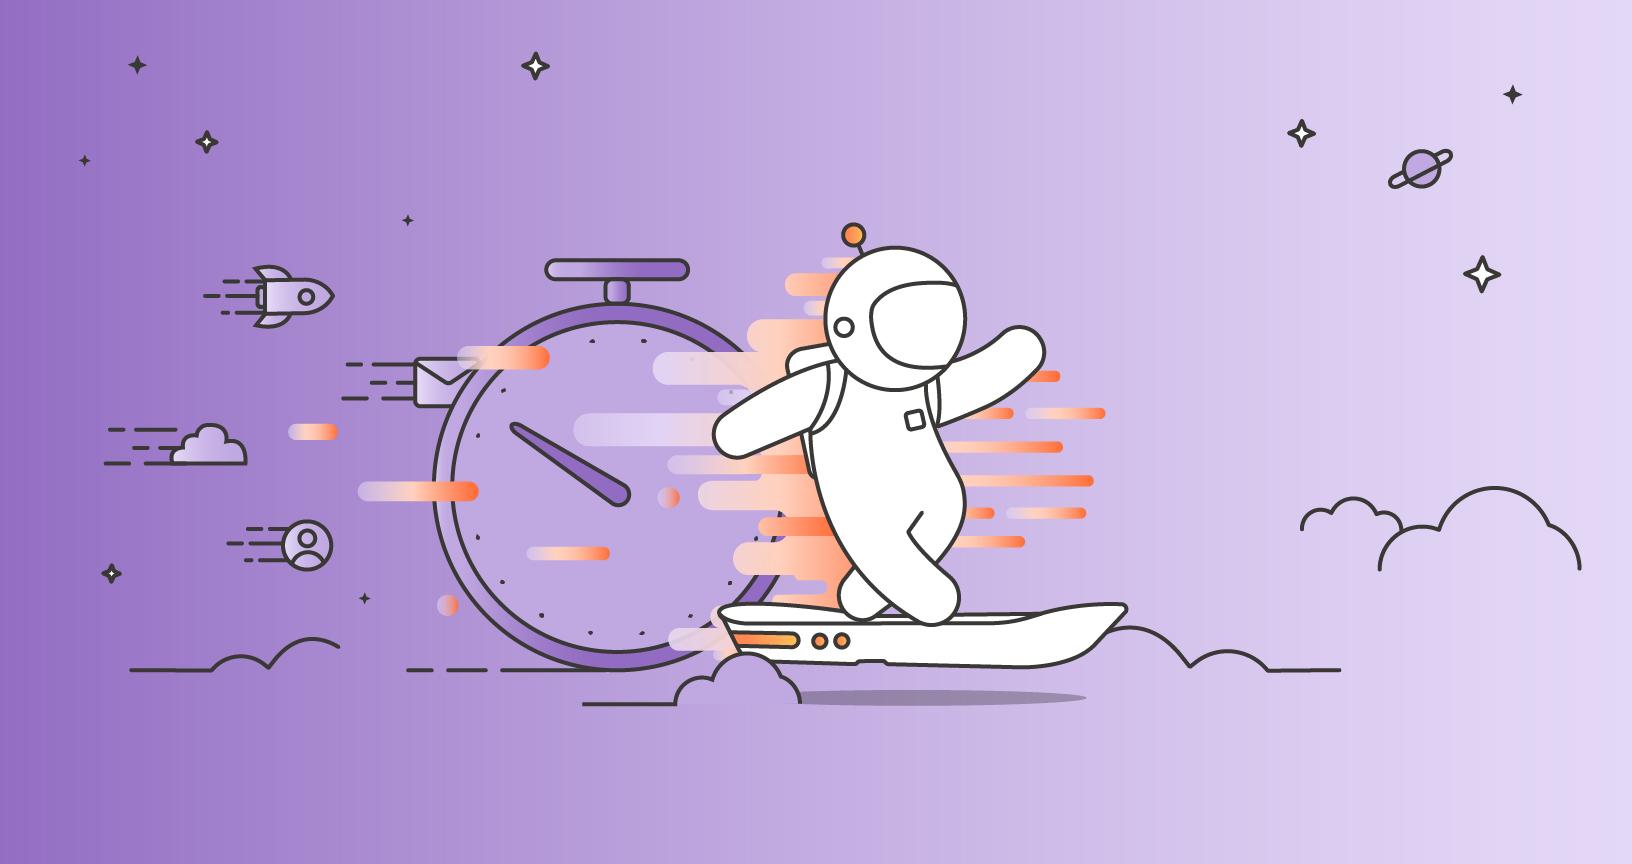 Postman hoverboarding through onboarding. Illustration.